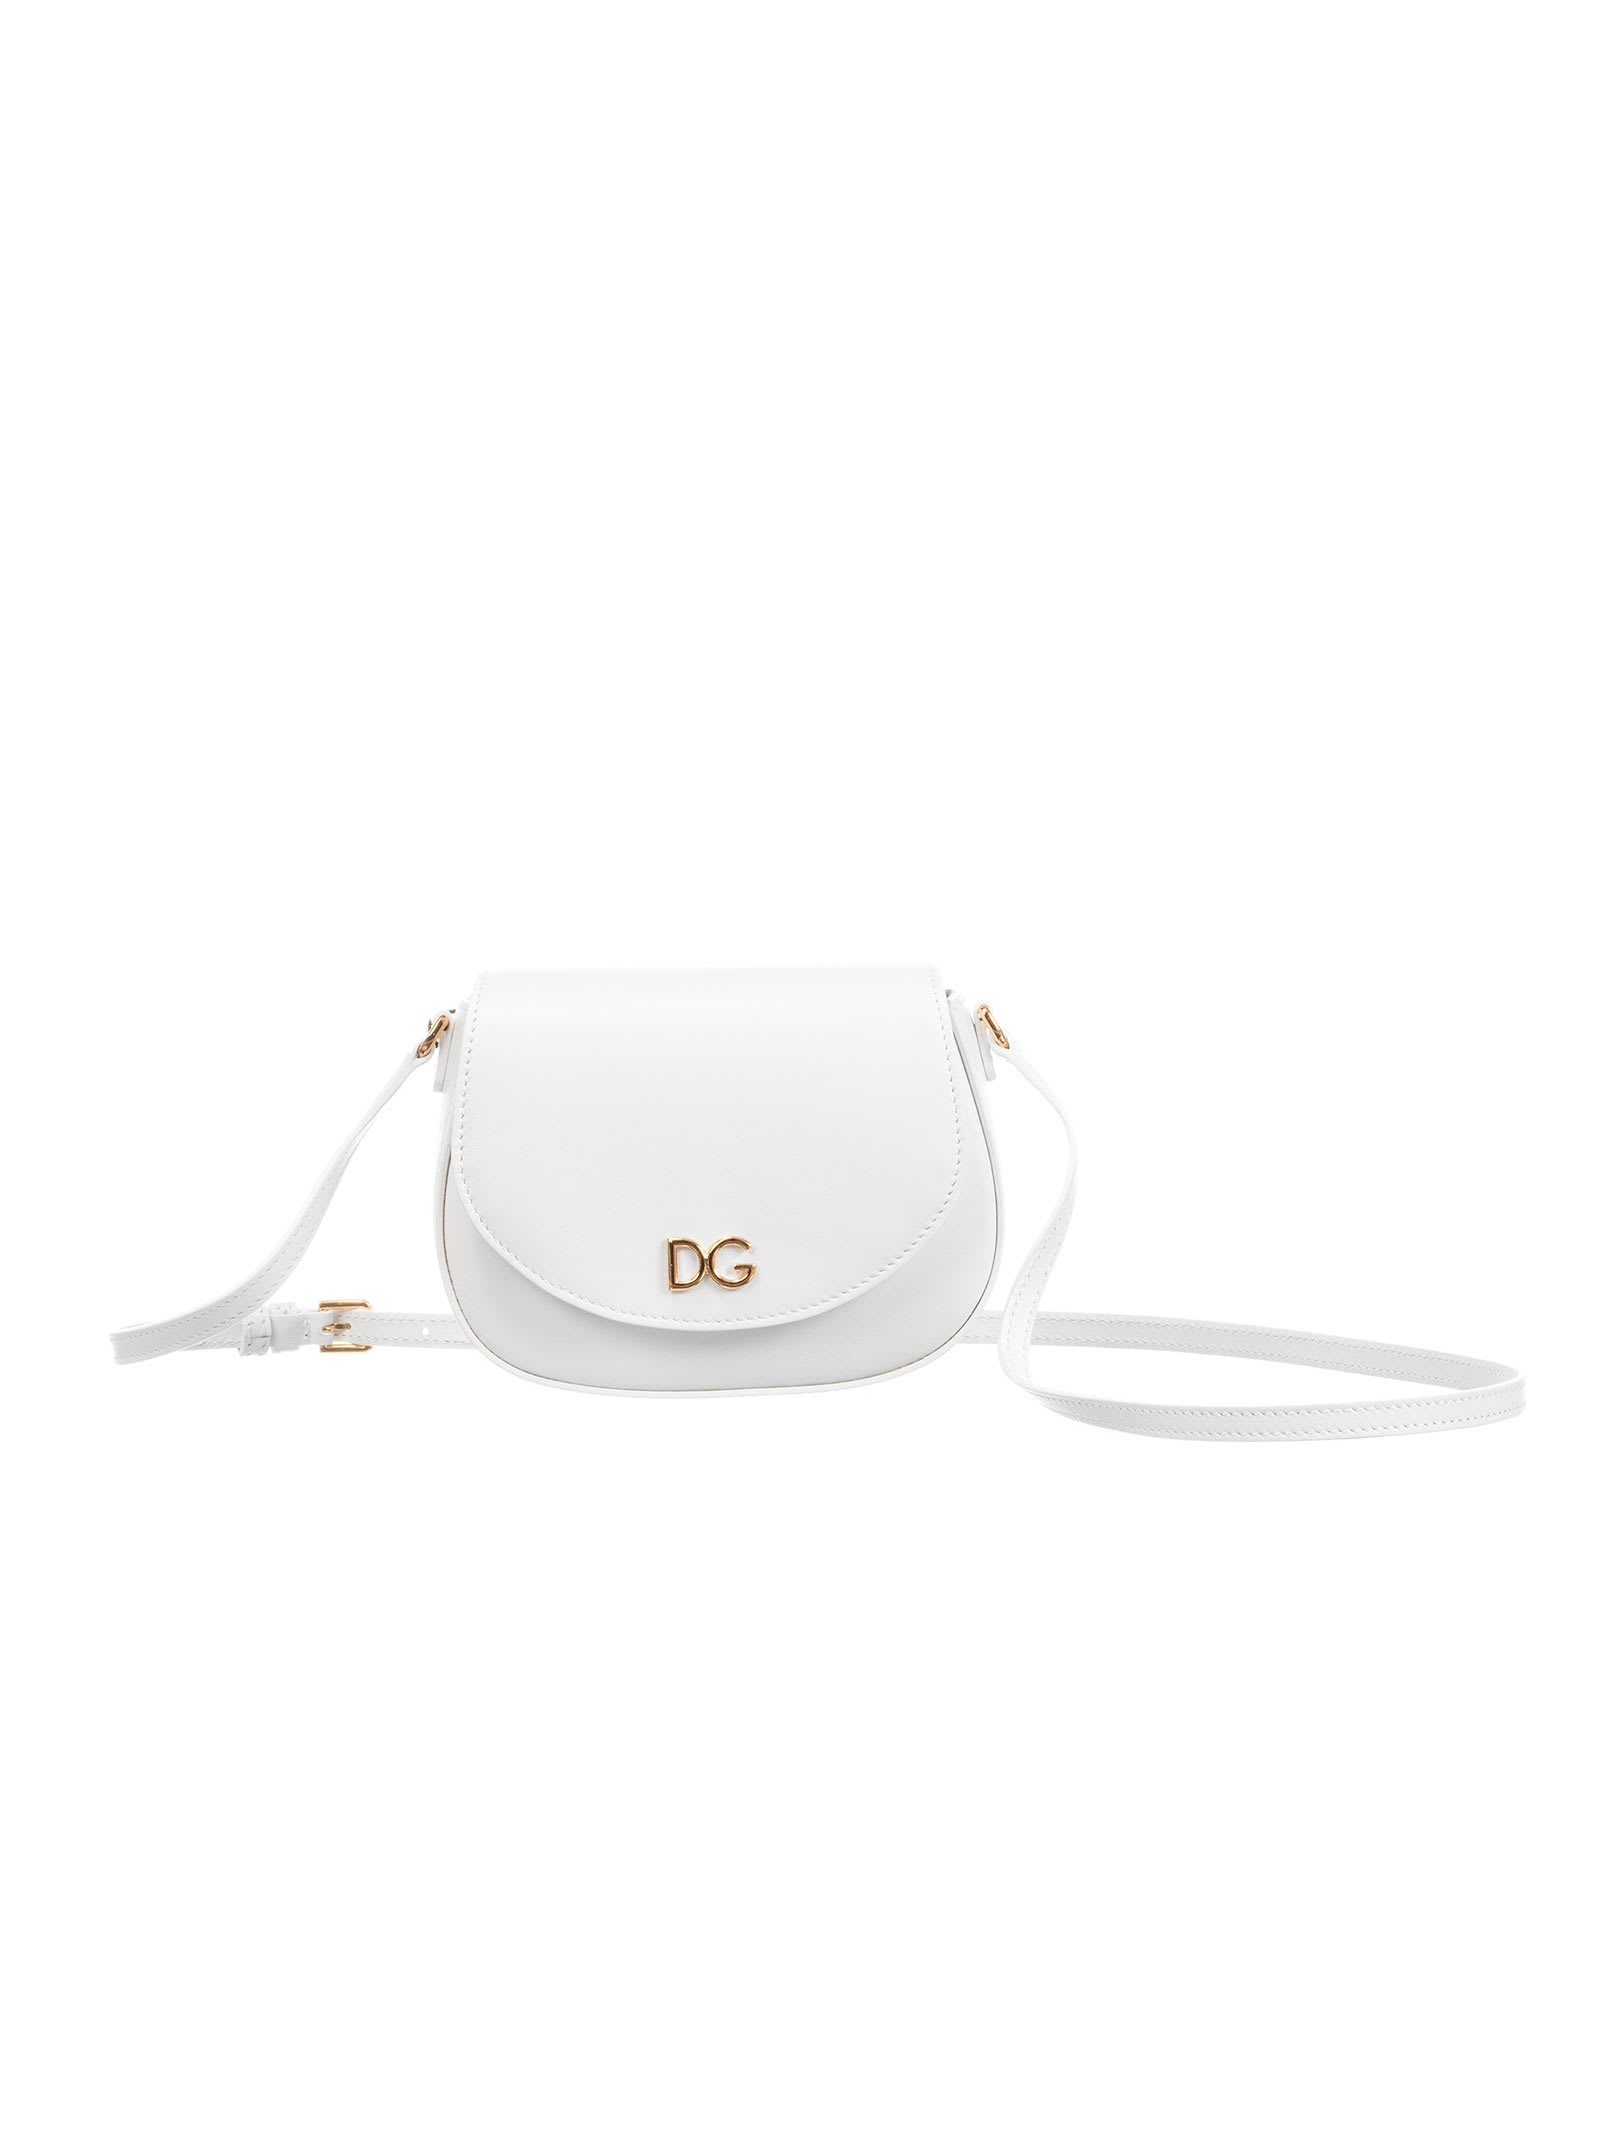 Dolce & Gabbana White Leather Handbag With Golden Details Dolce & gabbana Kids